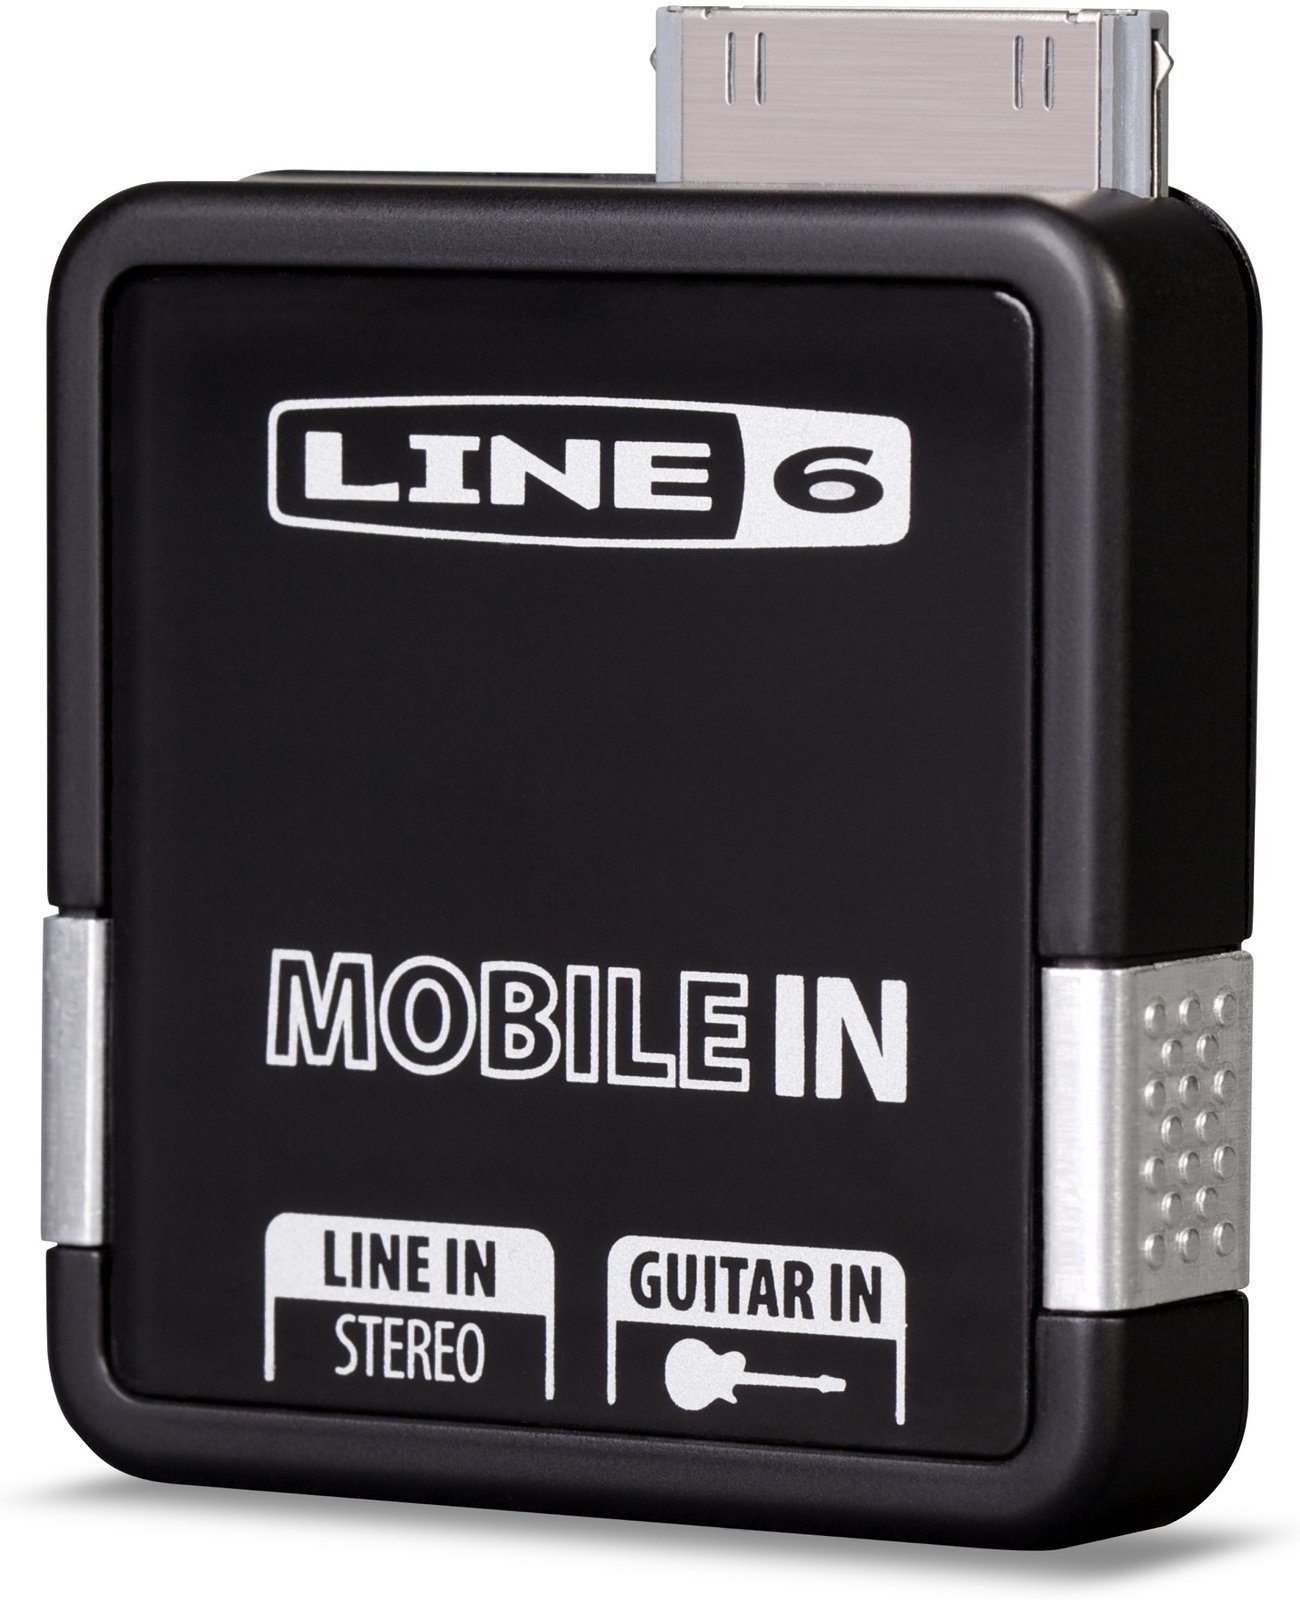 Studio Equipment Line6 Mobile In